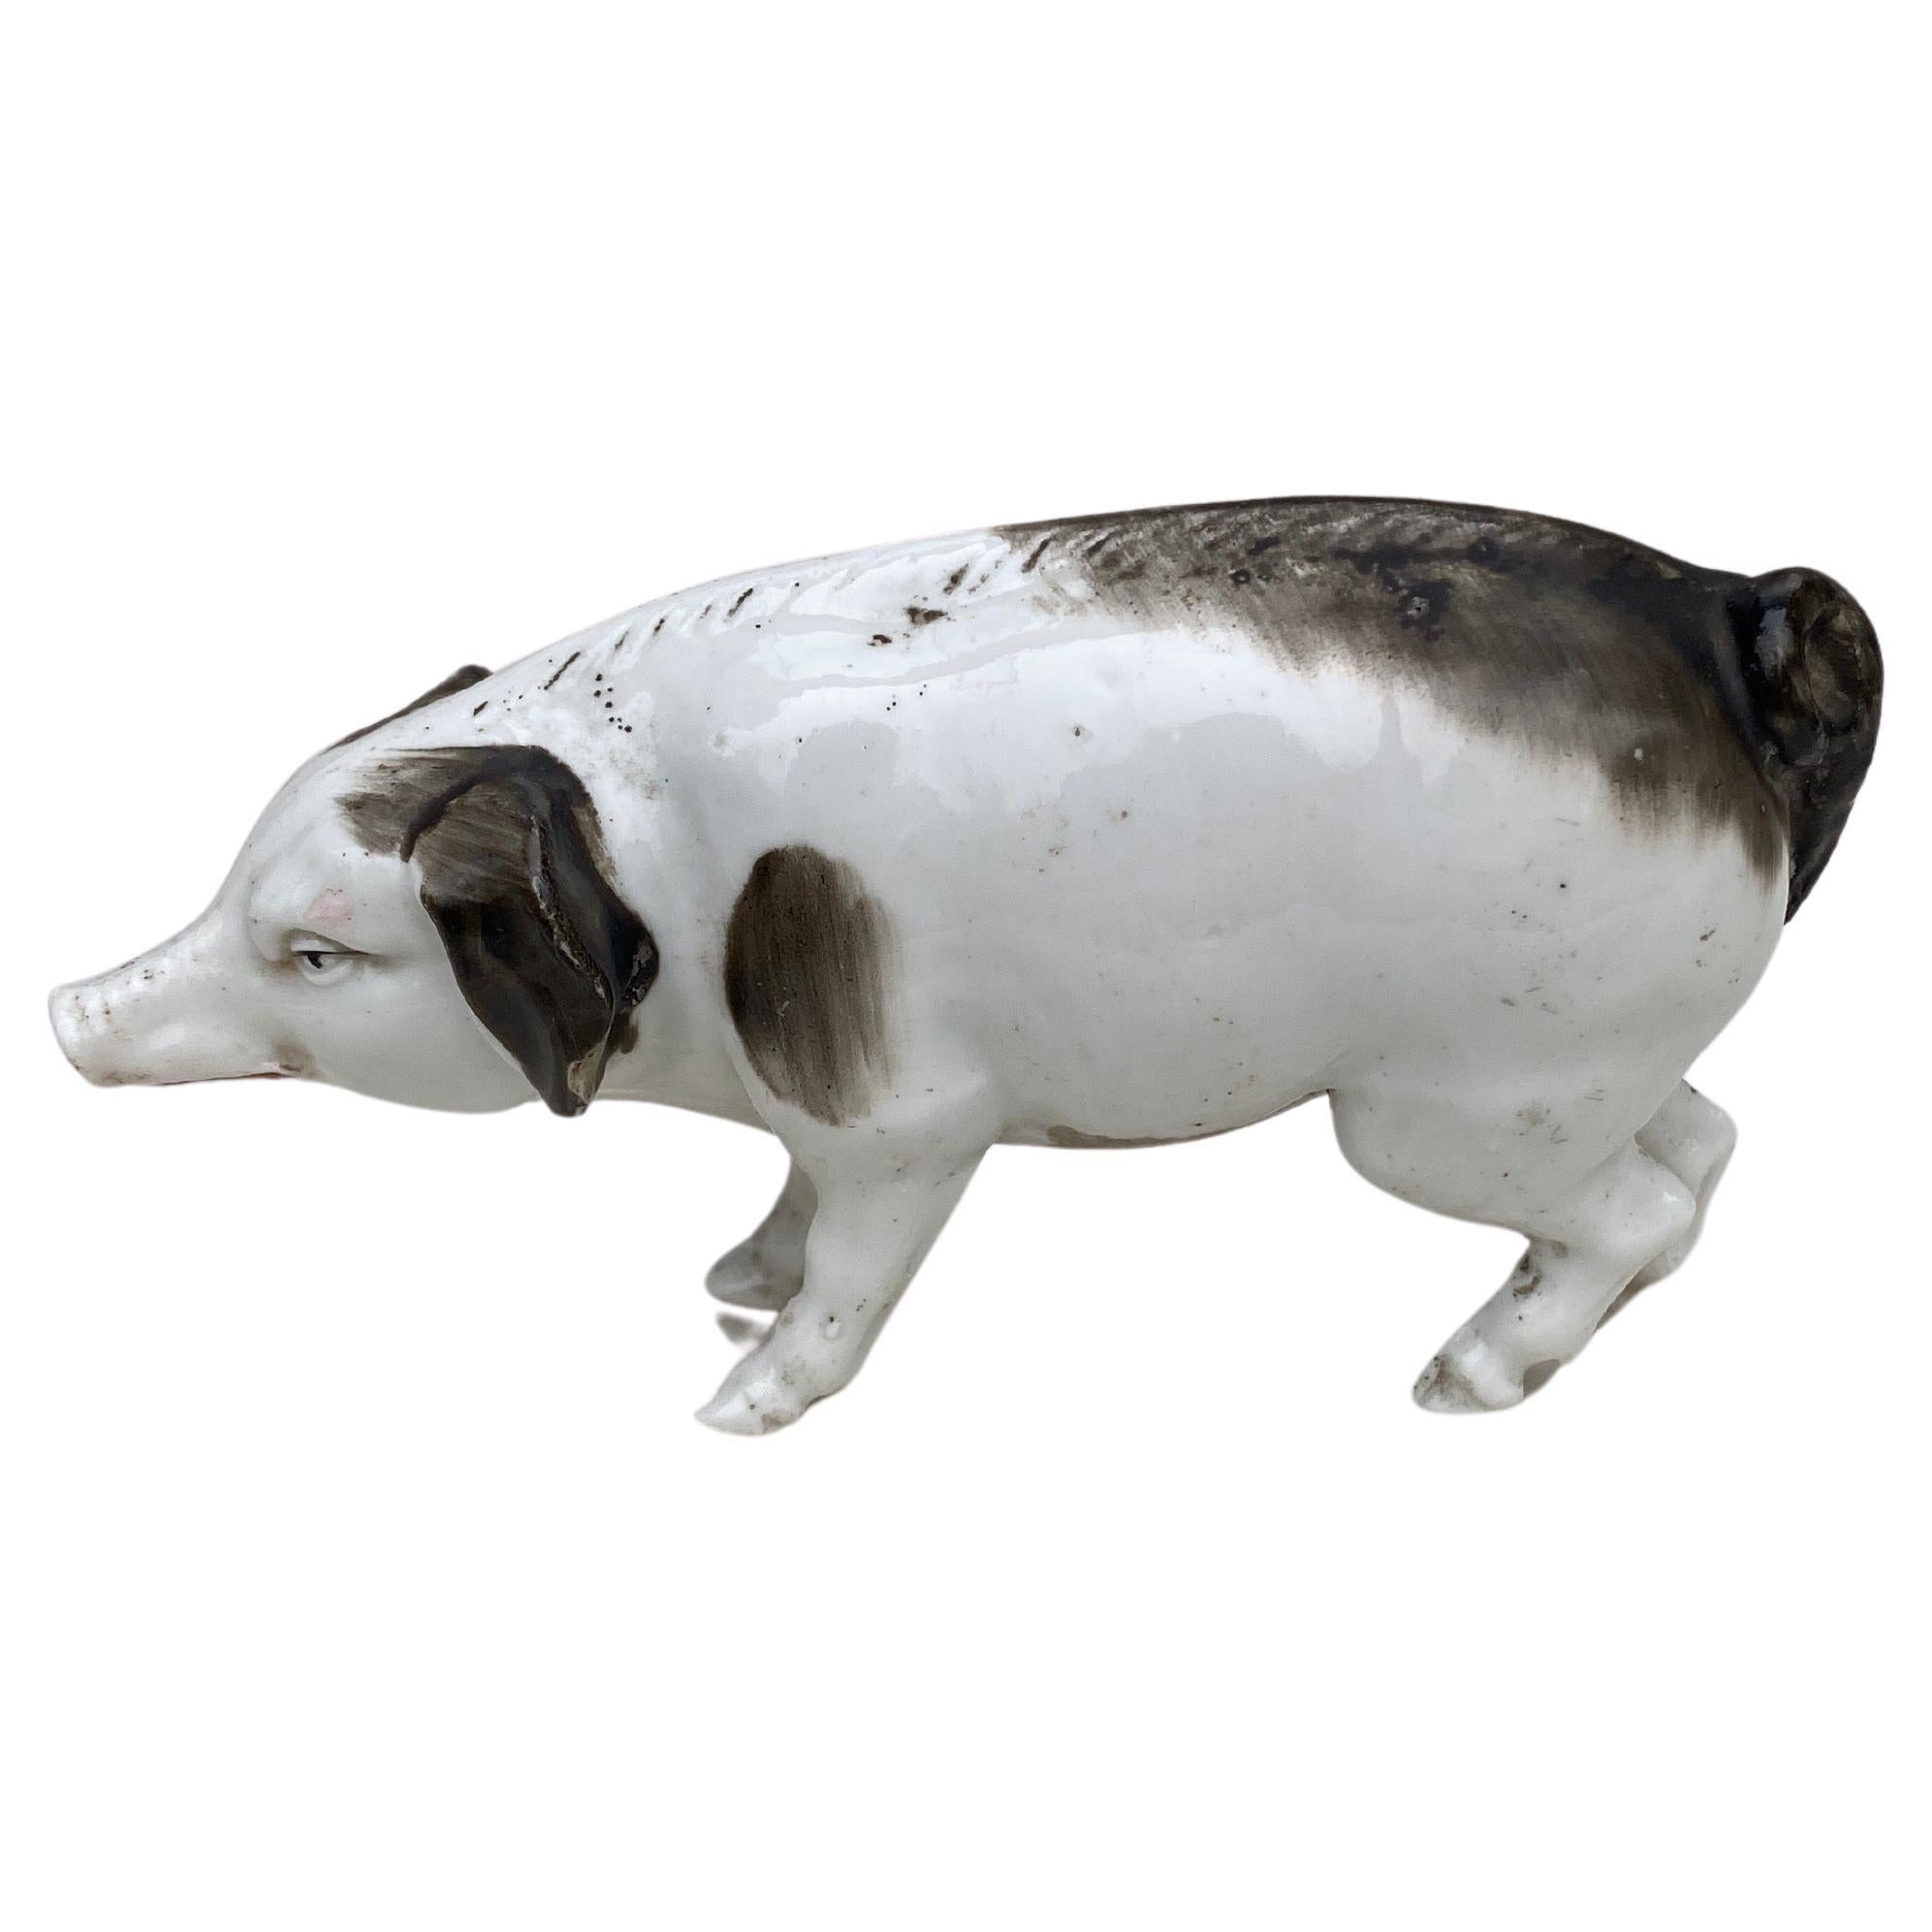 German Porcelain Pig Circa 1900